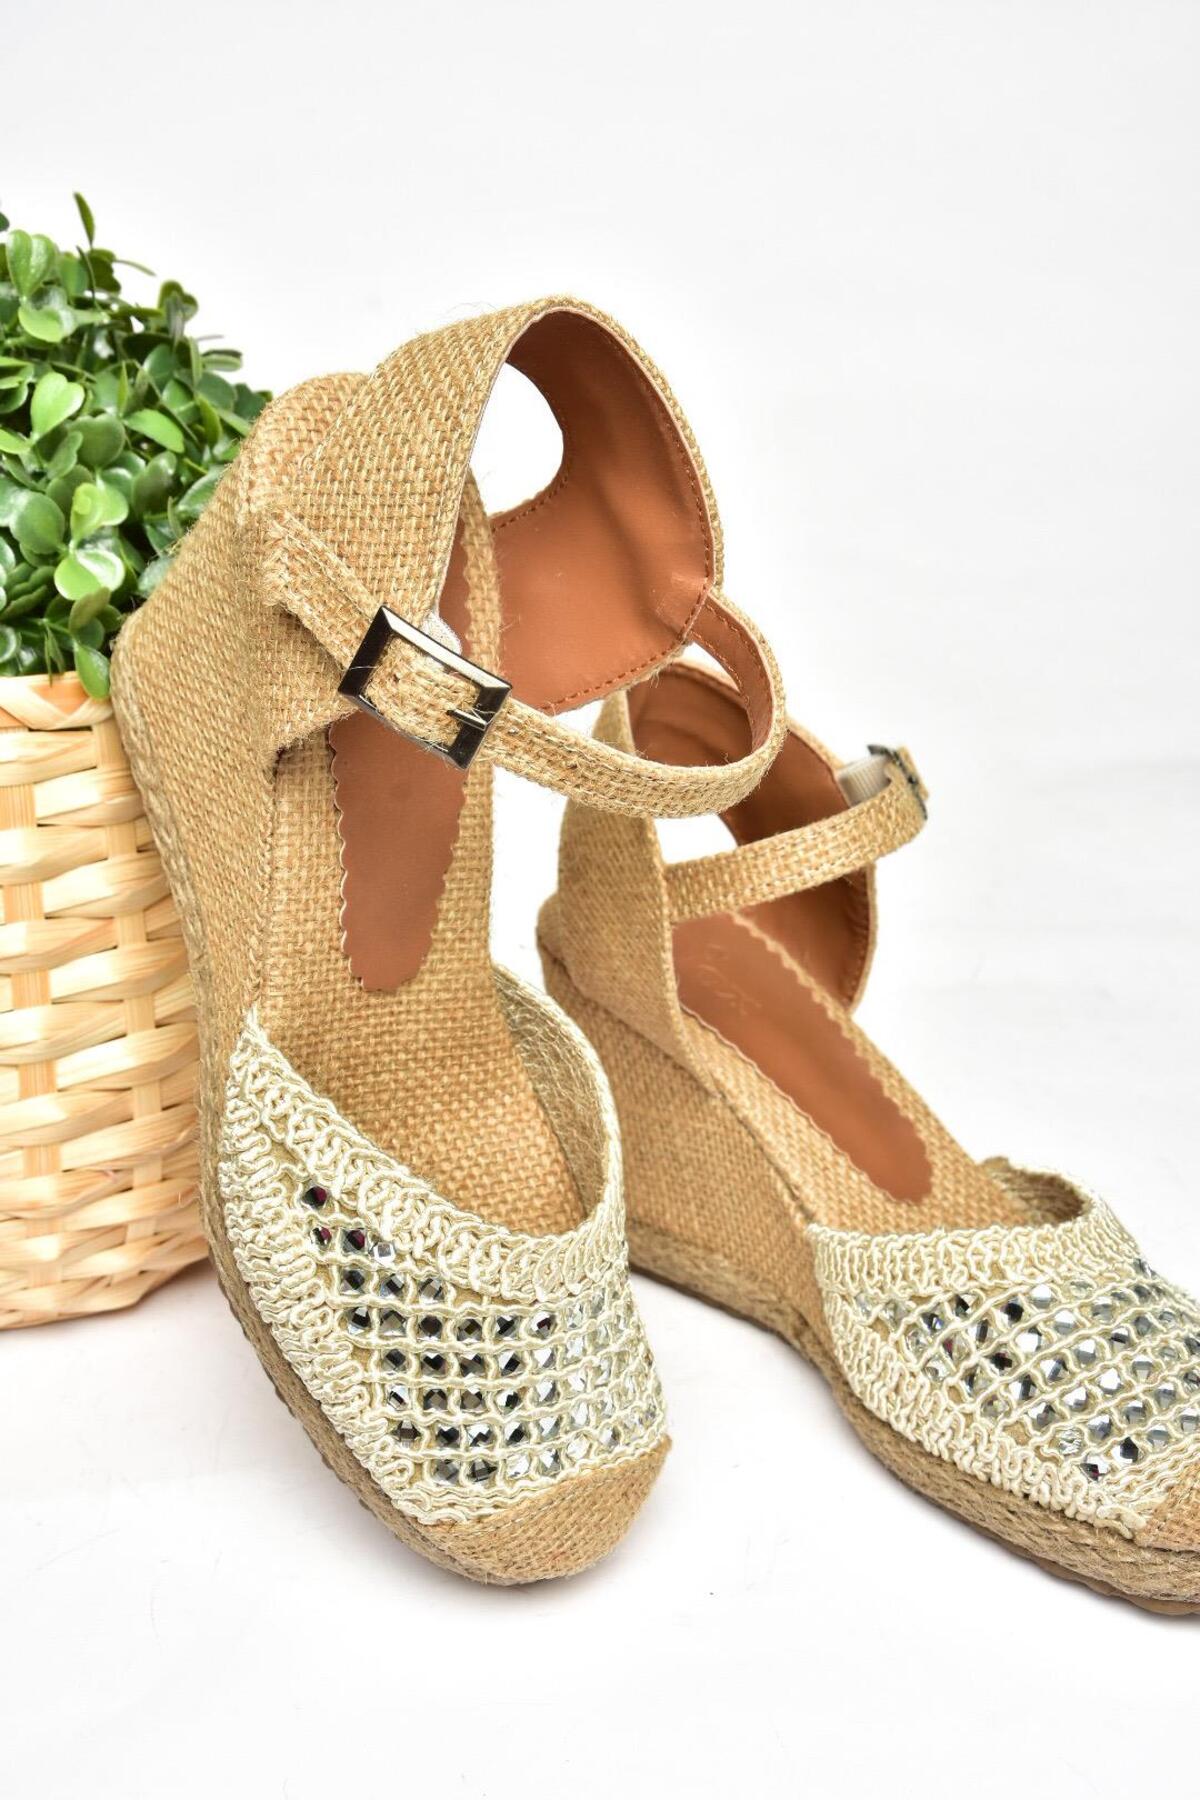 Fox Shoes P241612040 Women's Beige Stone Wedge Heel Shoes